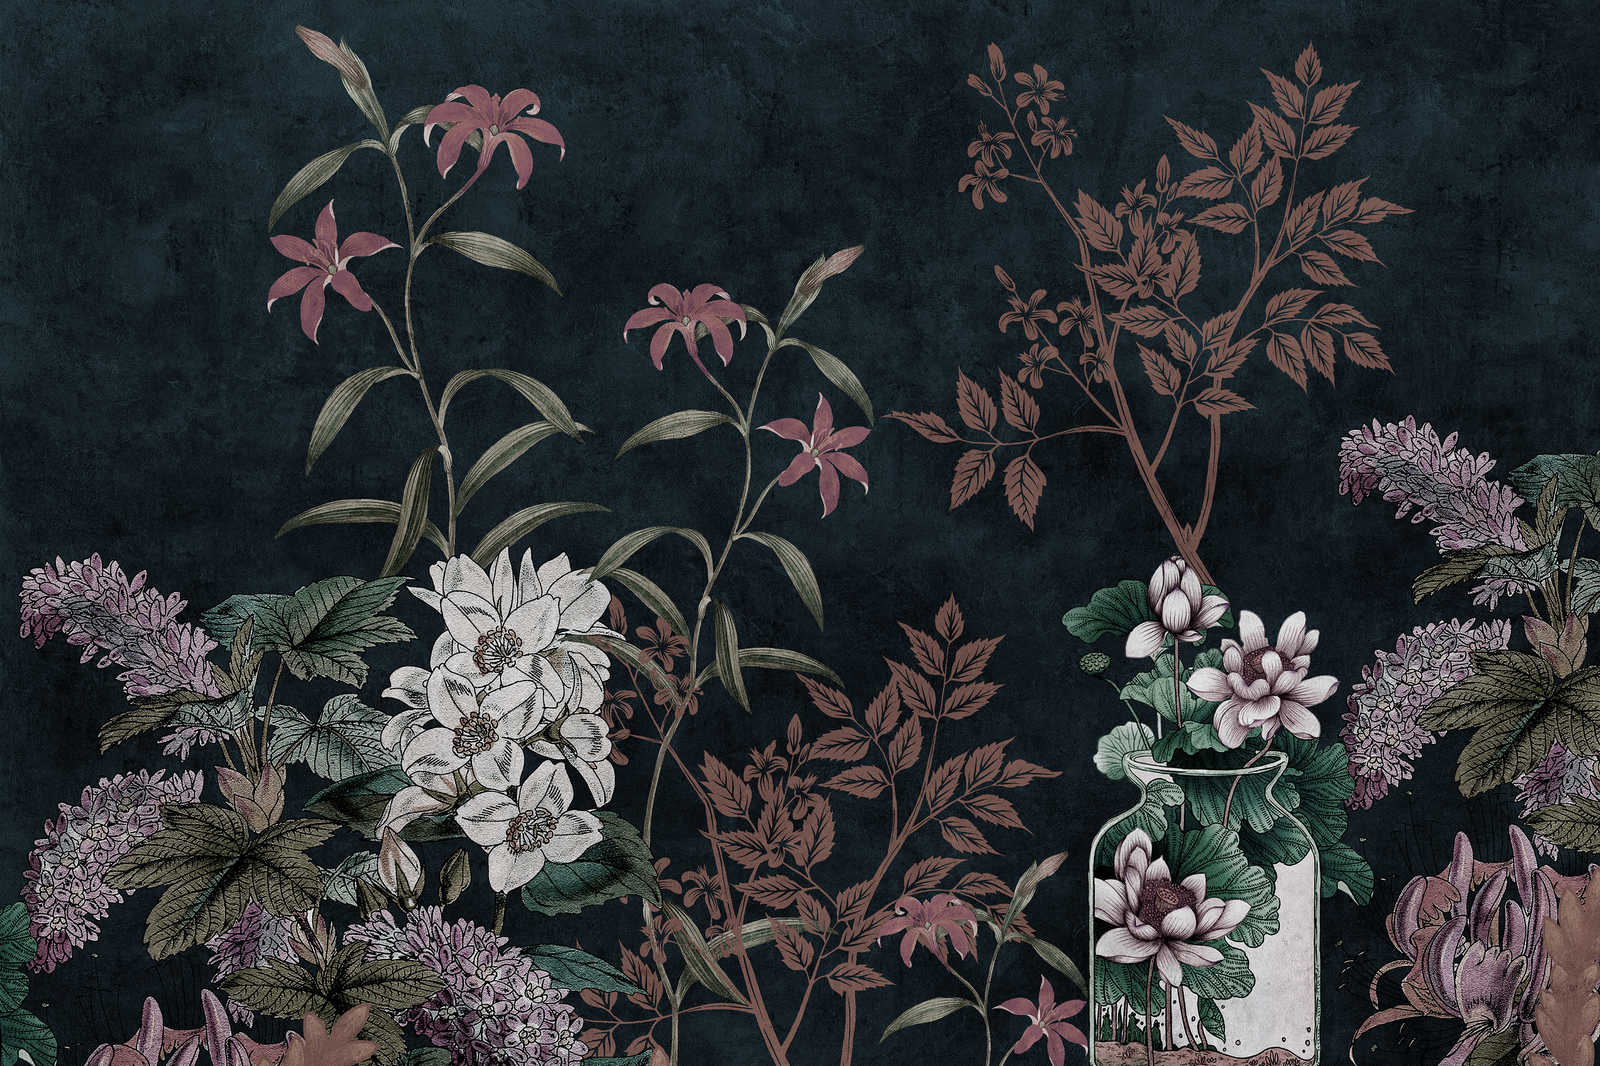             Dark Room 2 - Toile noire Botanical Muster Rosa - 1,20 m x 0,80 m
        